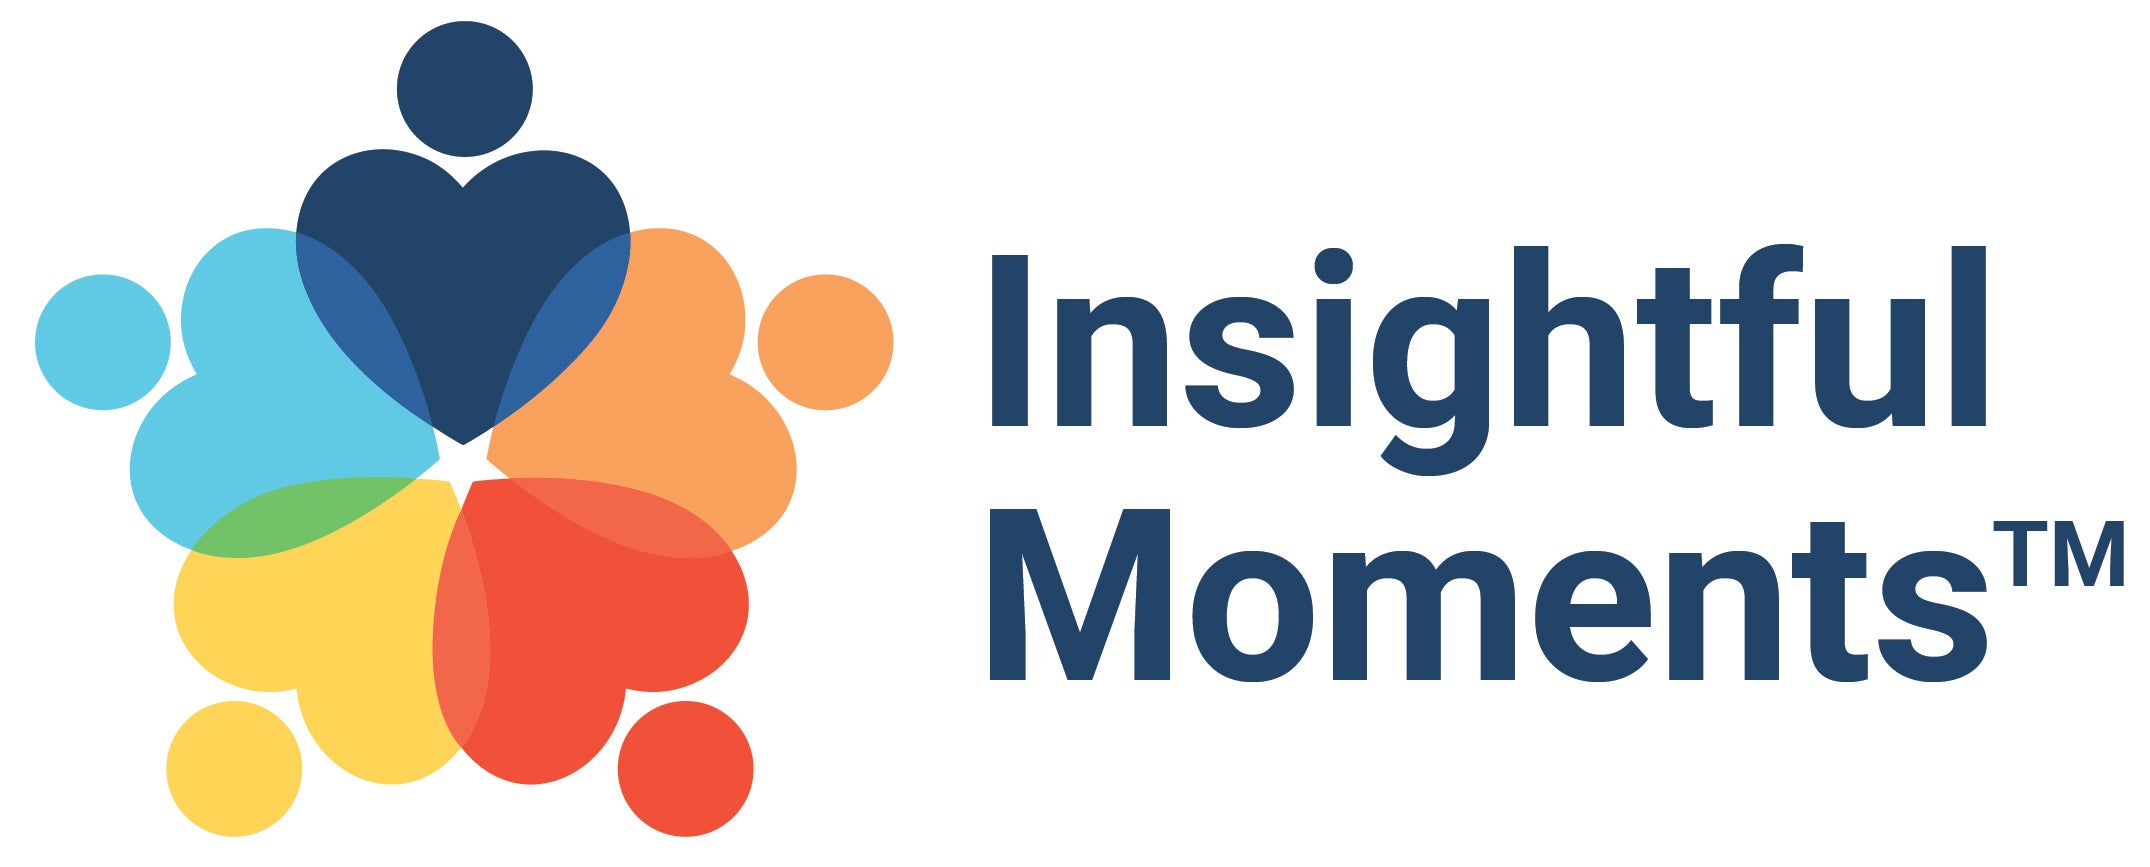 Insightful Moments logo